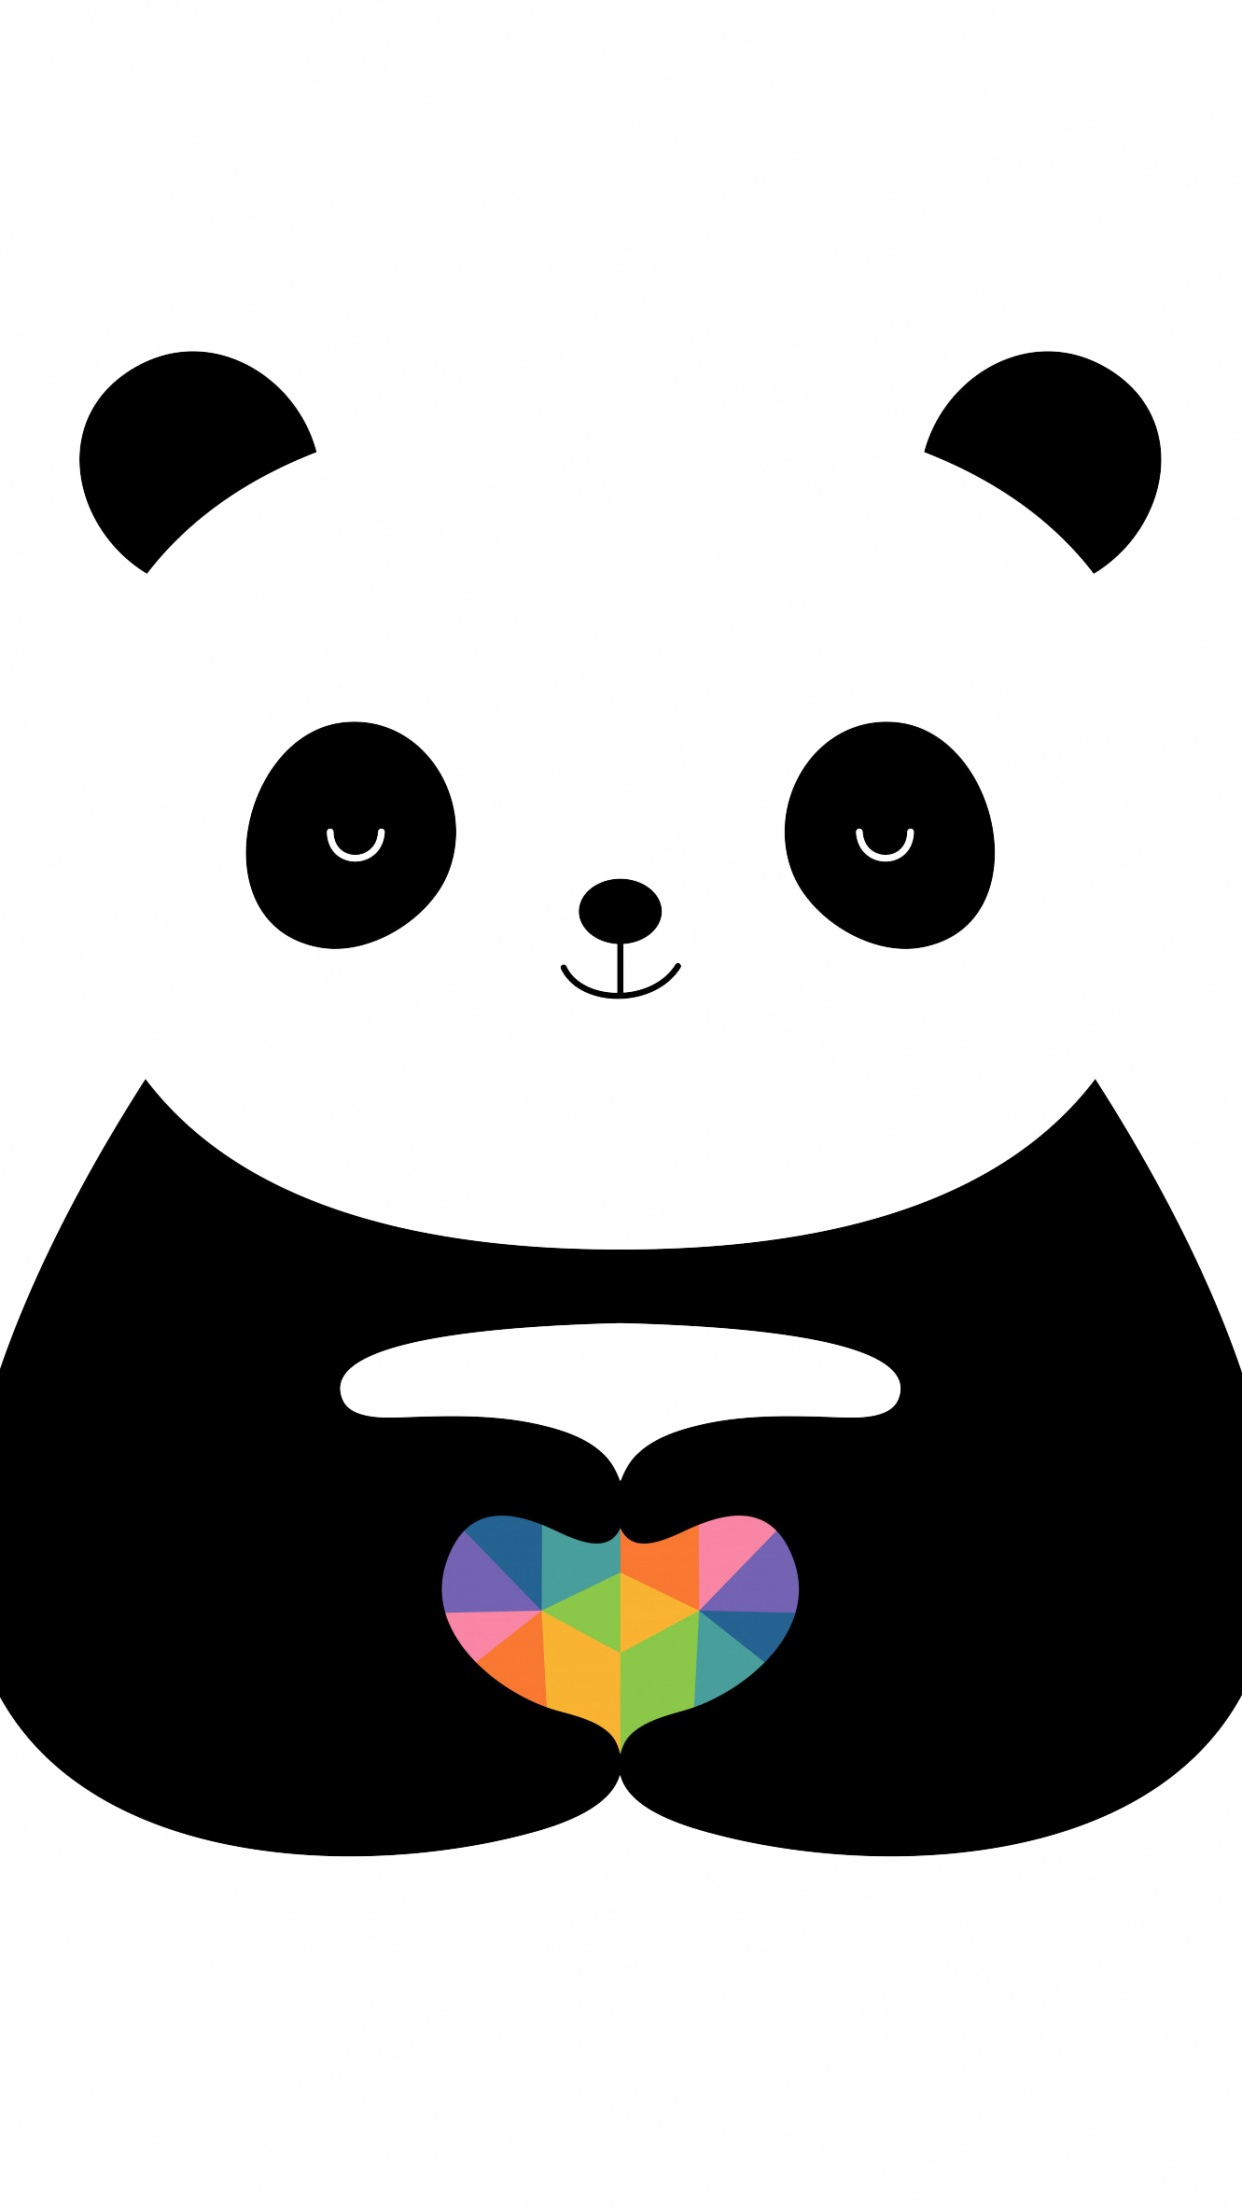 Cute Panda Face Seamless Wallpaper Stock Illustration - Download Image Now  - Animal, Animal Body Part, Animal Head - iStock